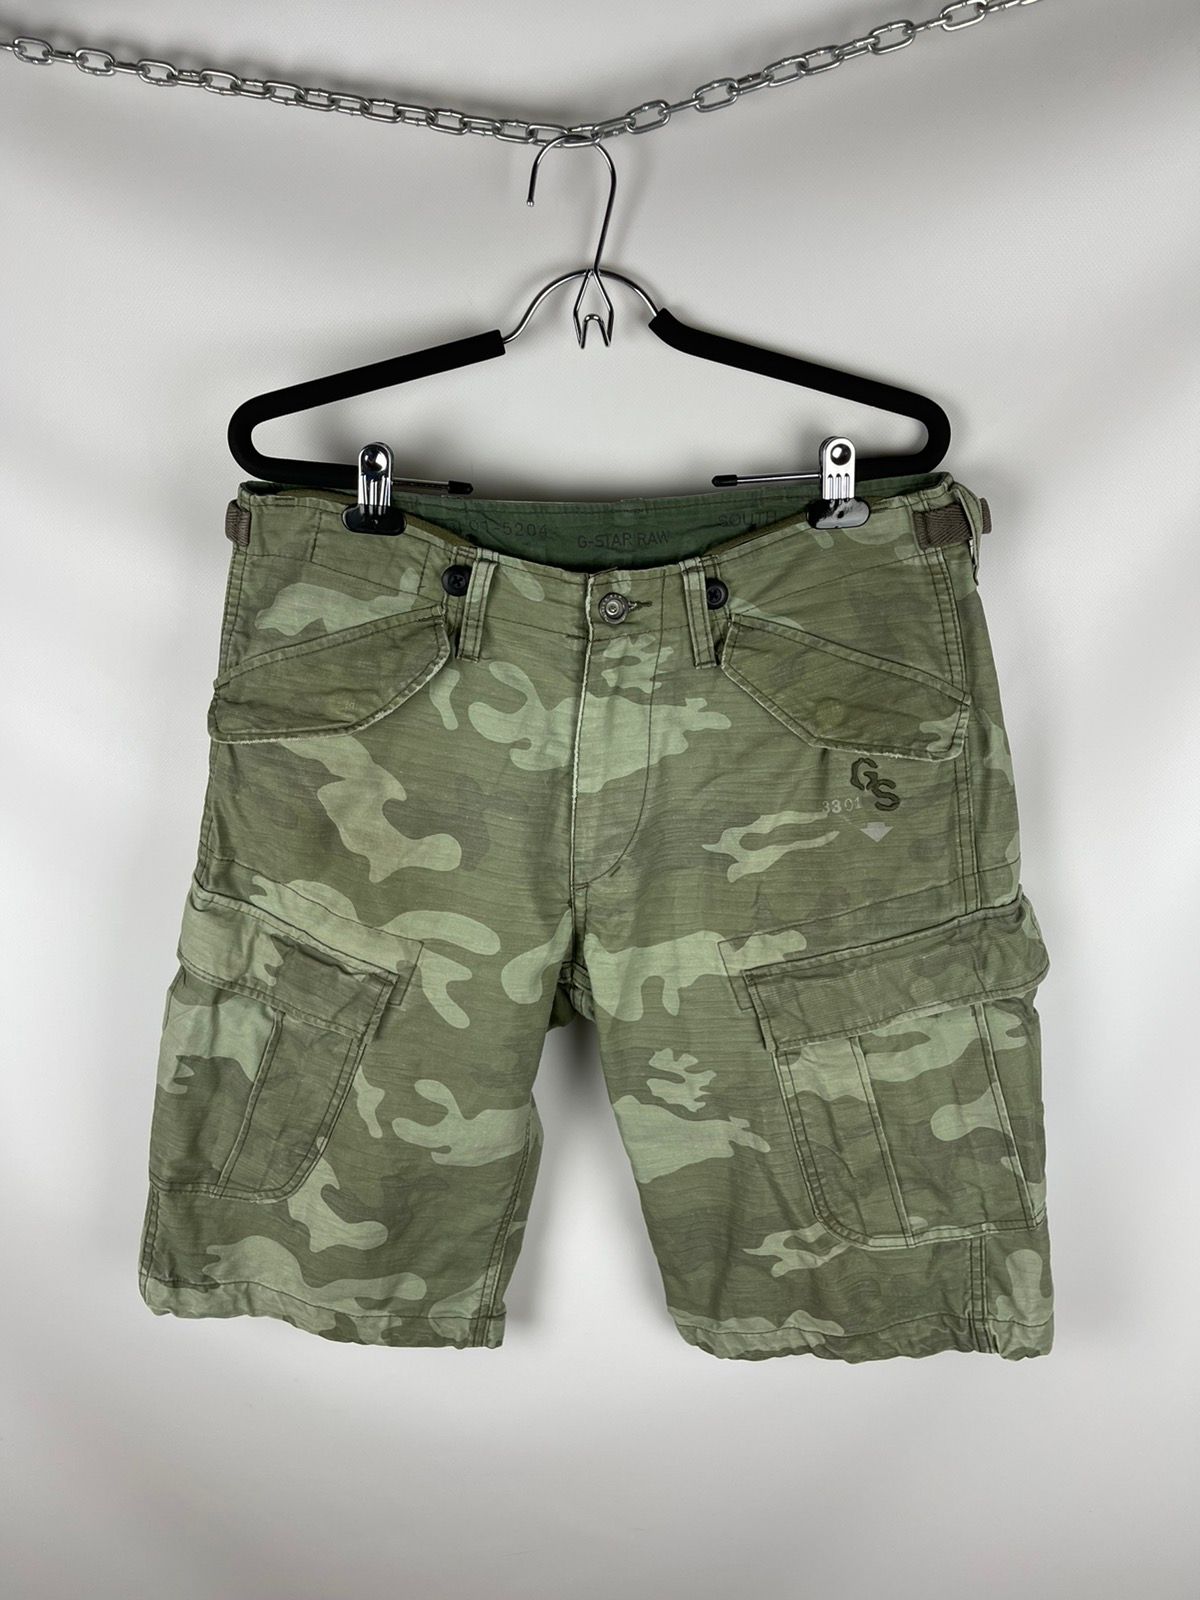 G Star Raw G-Star Raw Original Battle pants 1/2 camo cargo shorts | Grailed